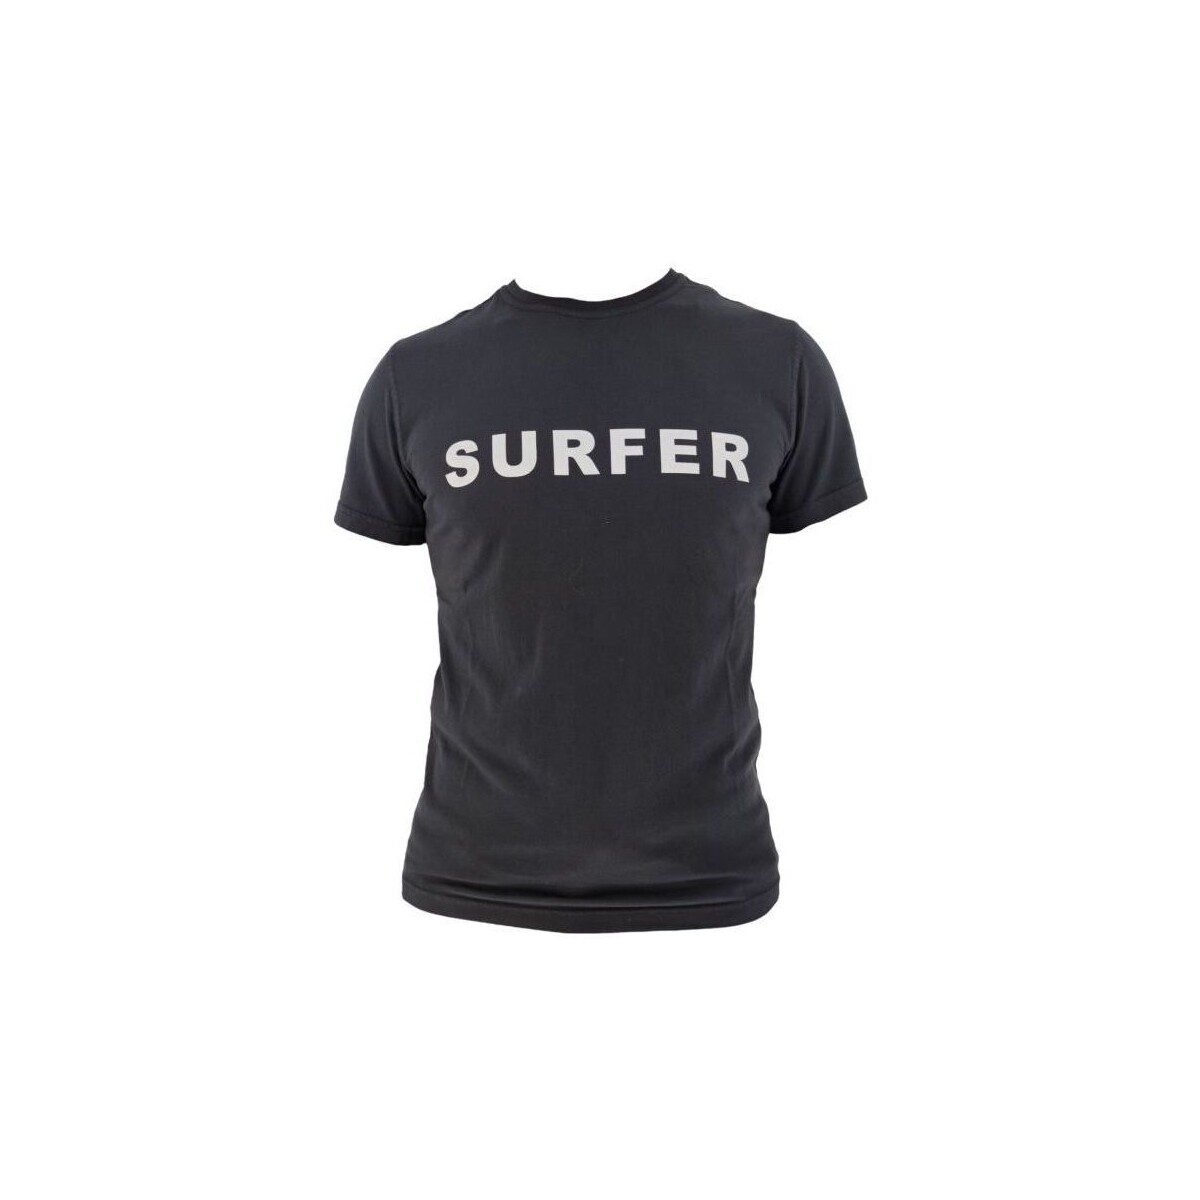 textil Hombre Camisetas manga corta Bl'ker Camiseta Surfer Hombre NaVy Azul